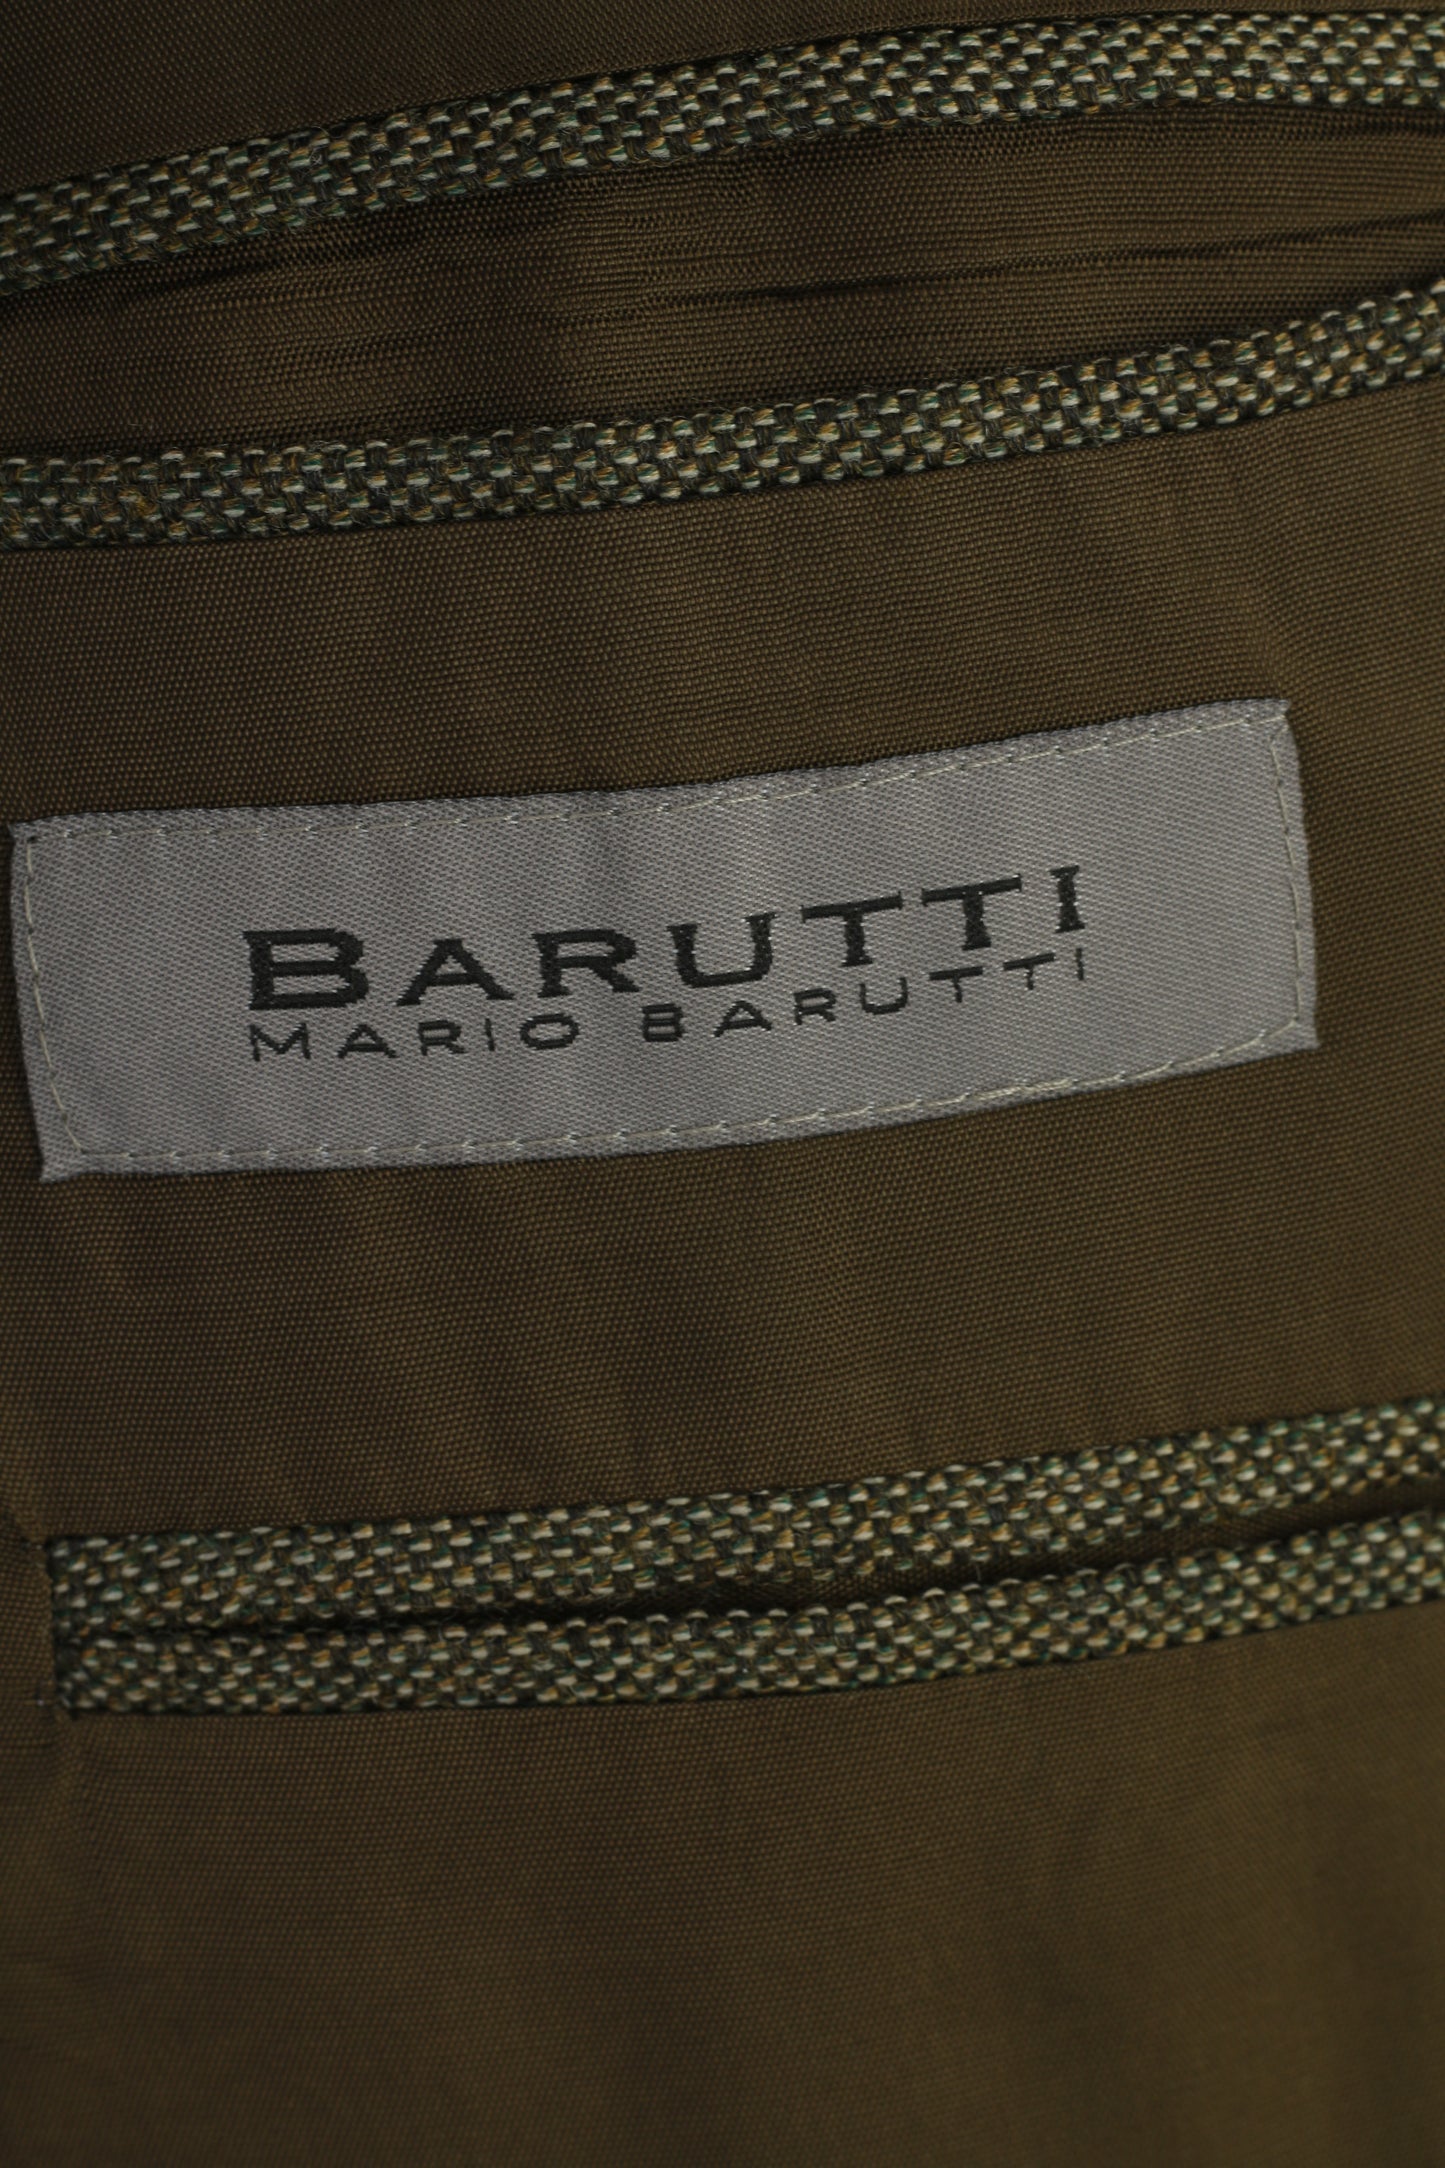 Mario Barutti Hommes 50 XL Blazer Vert Épaulettes Veste Hauptfutter Simple Boutonnage